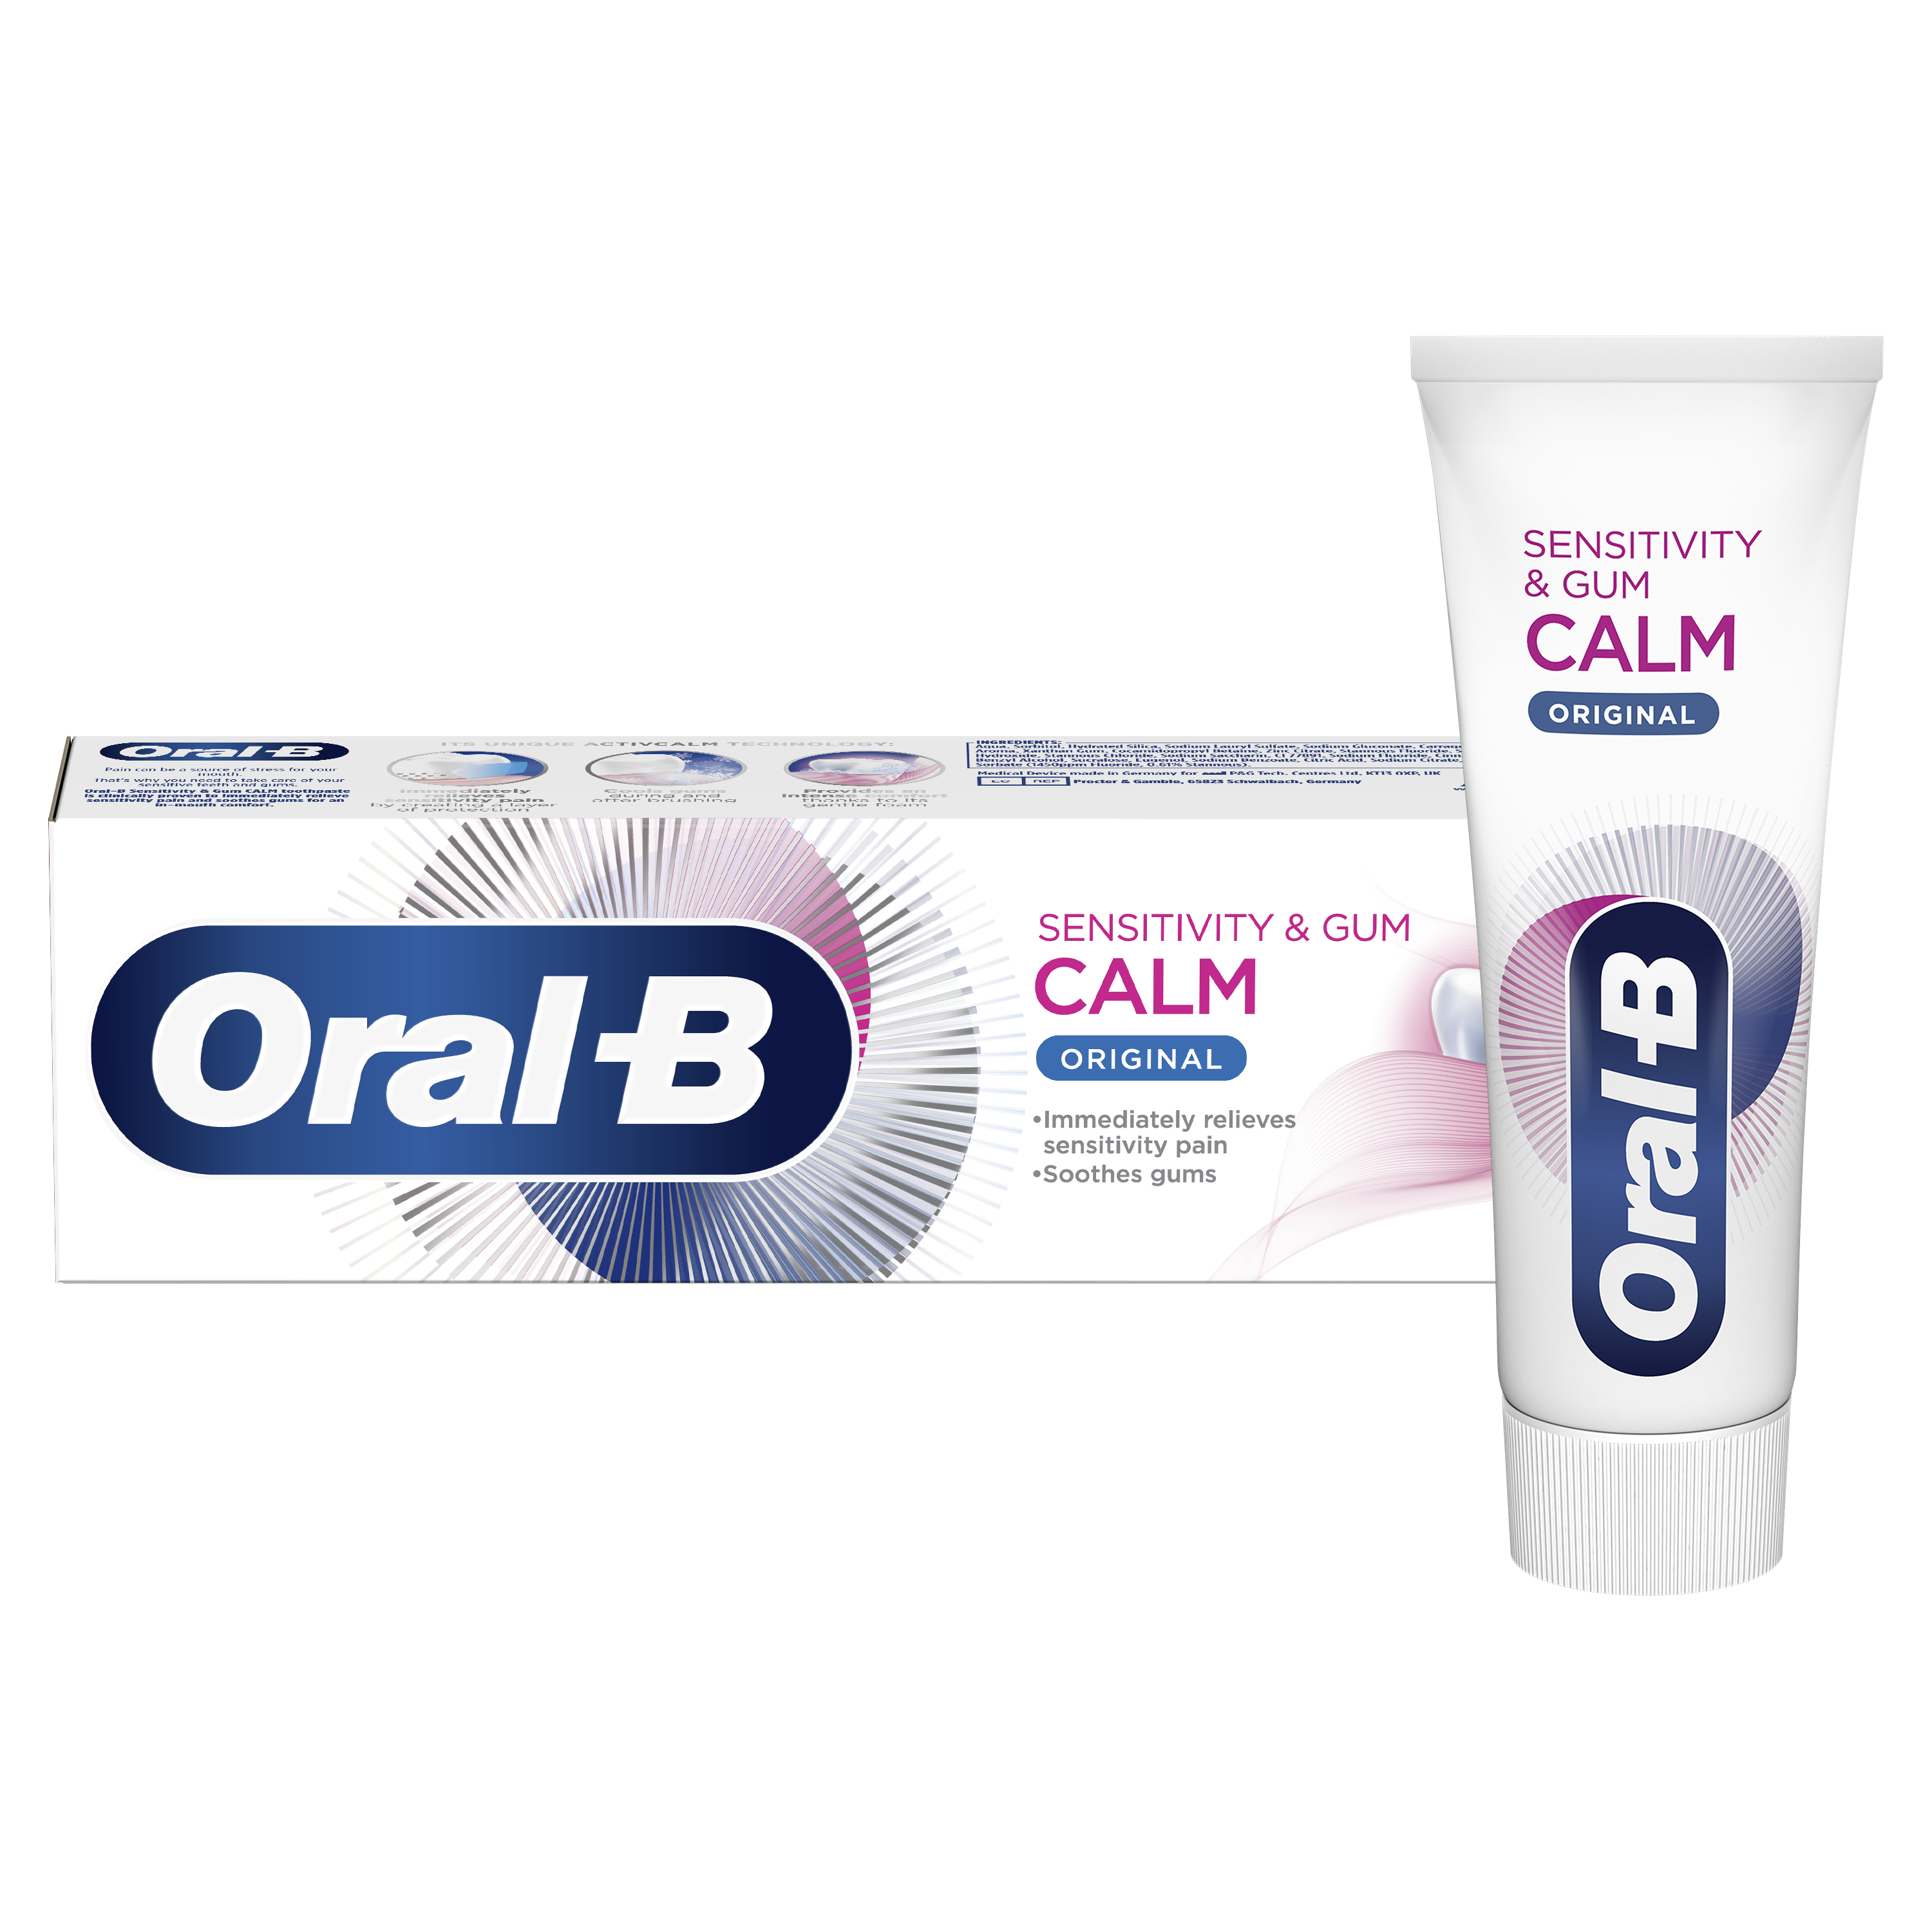 Sanders Medaille Tram Oral-B Sensitivity & Gum Calm Toothpaste | Oral-B UK